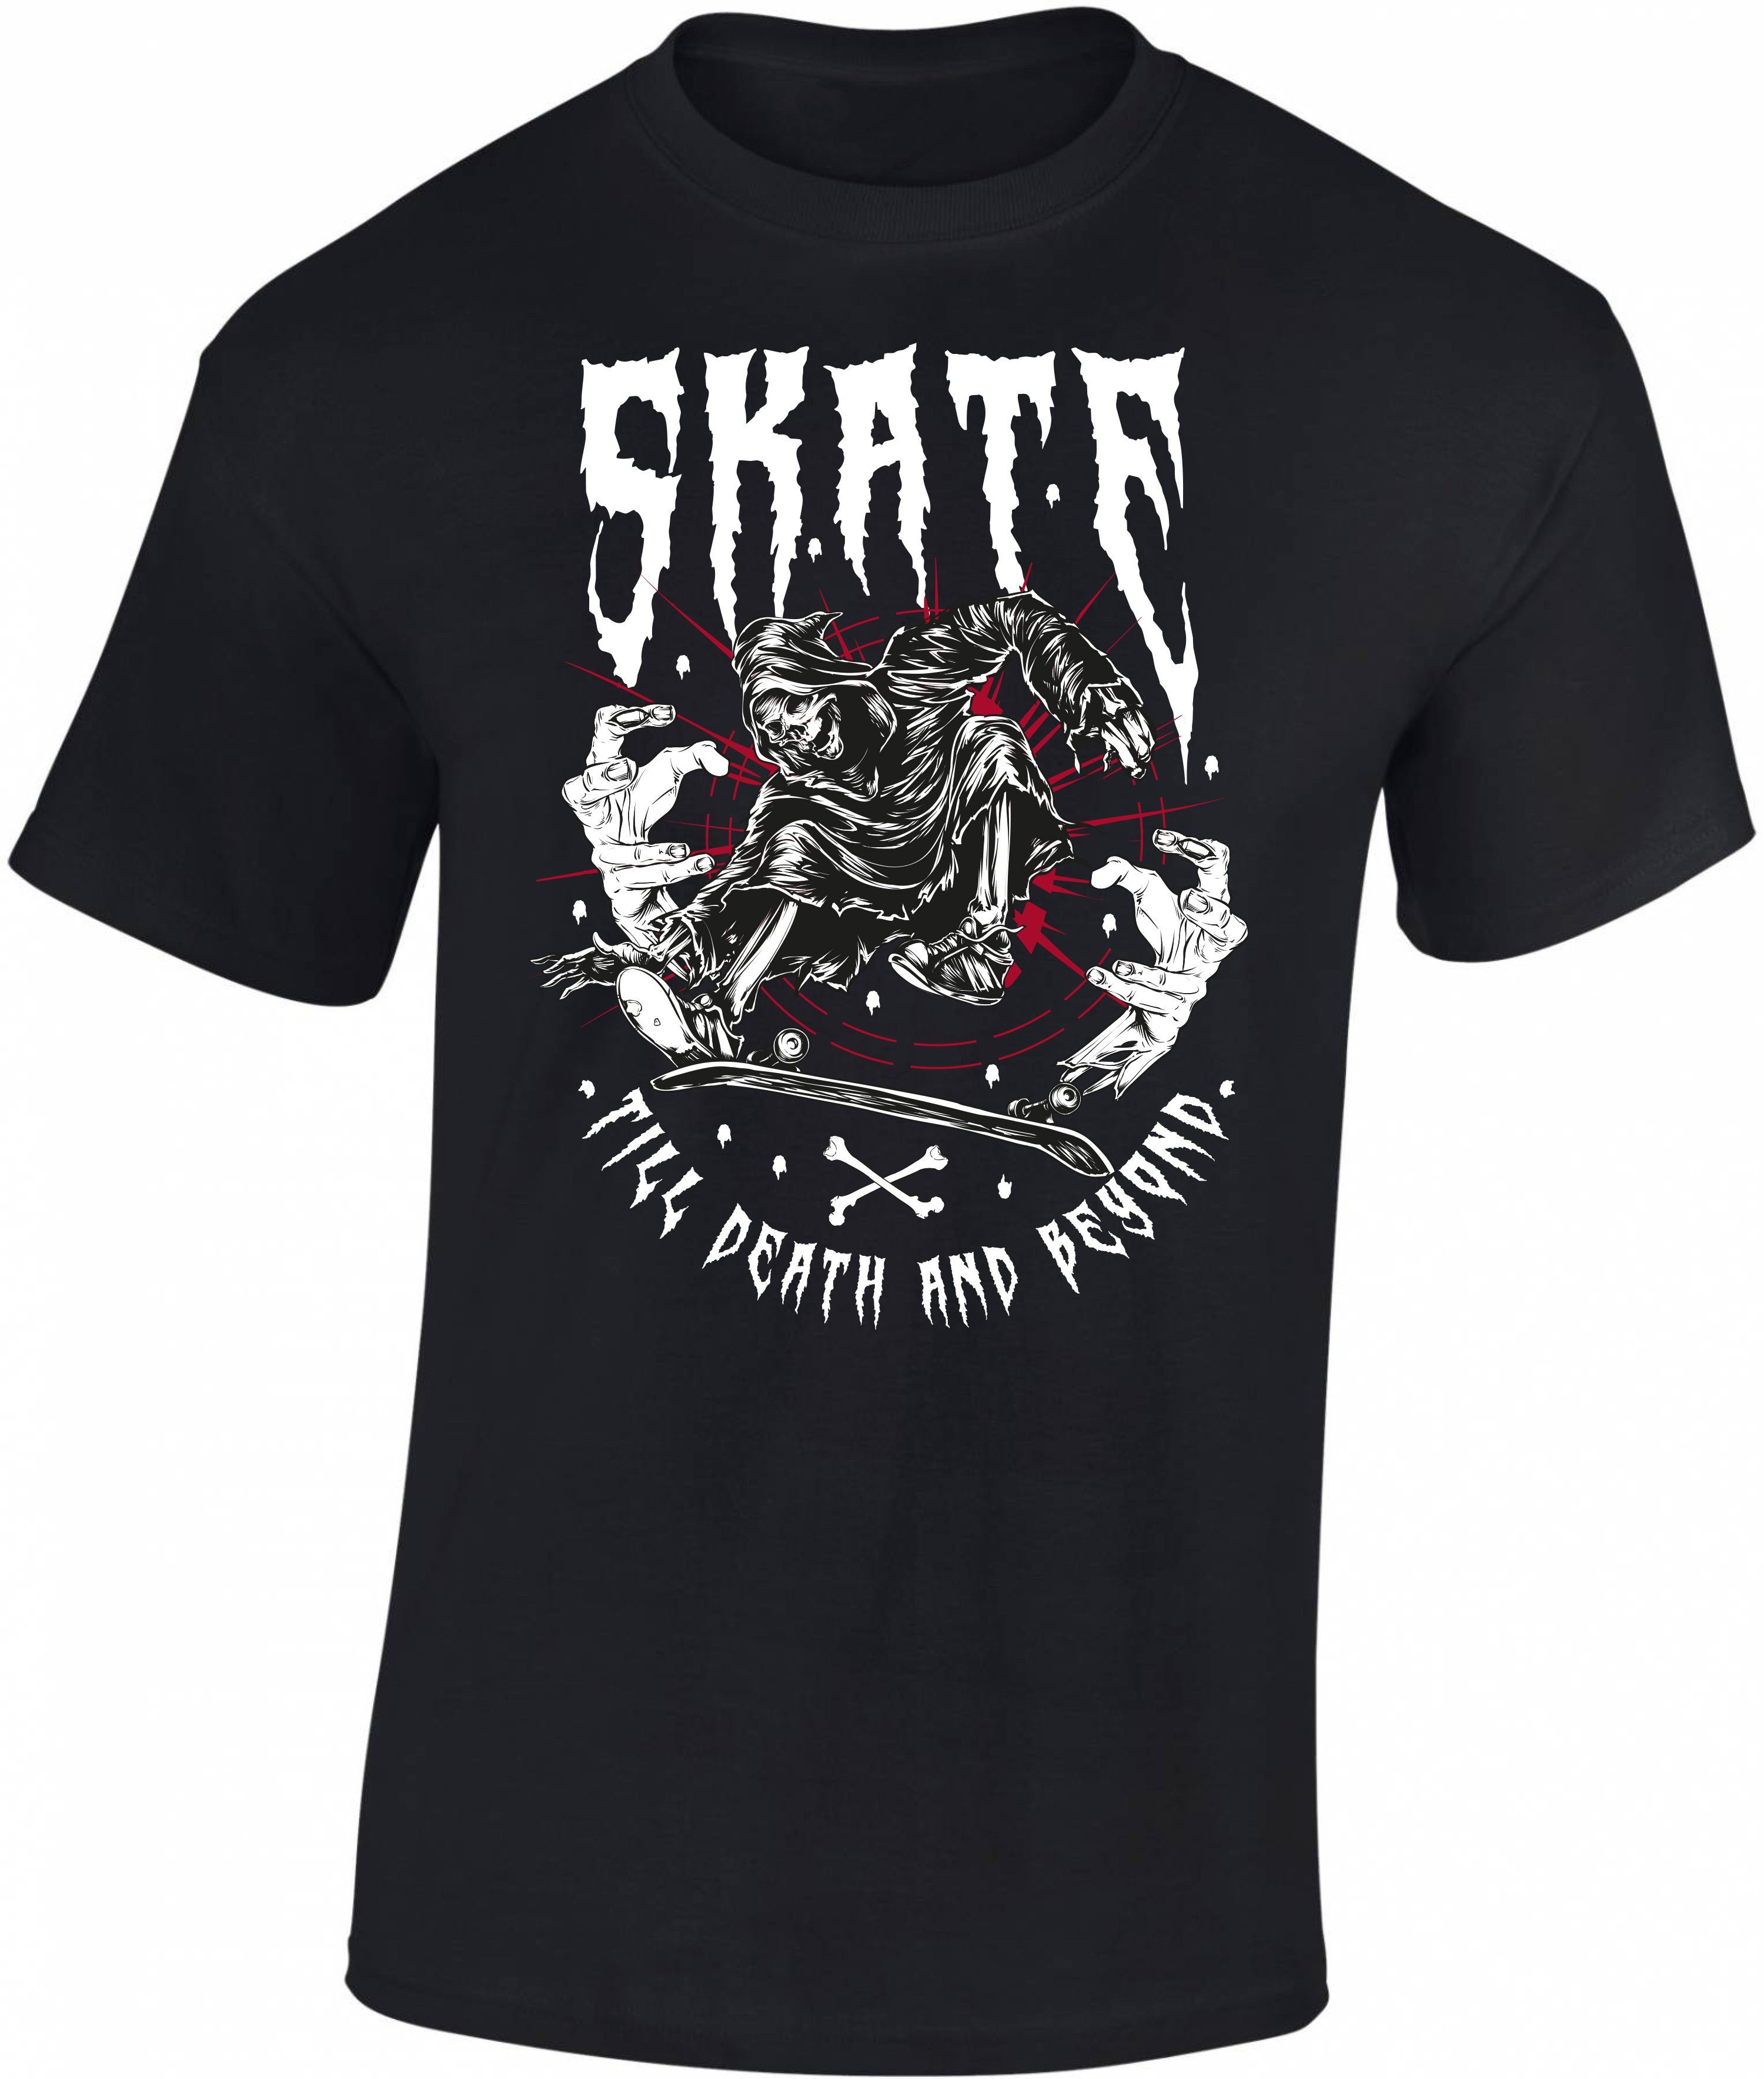 Baddery Print-Shirt Kinder Skateboard T-Shirt: Skate till Death - Skaten Skater, hochwertiger Siebdruck, aus Baumwolle